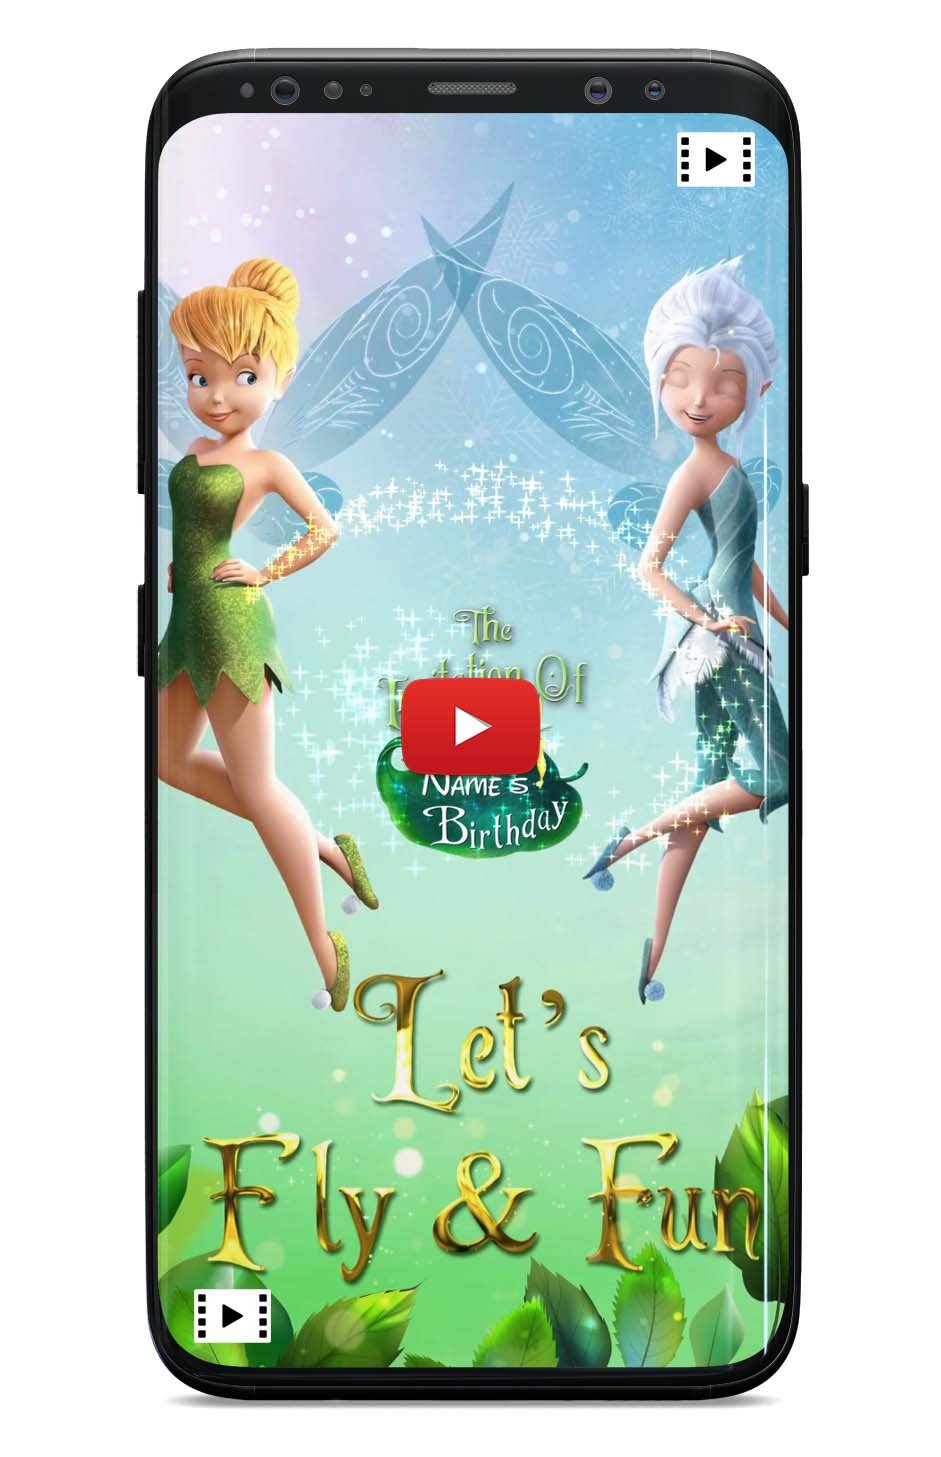 Tinker Bell birthday invitation video